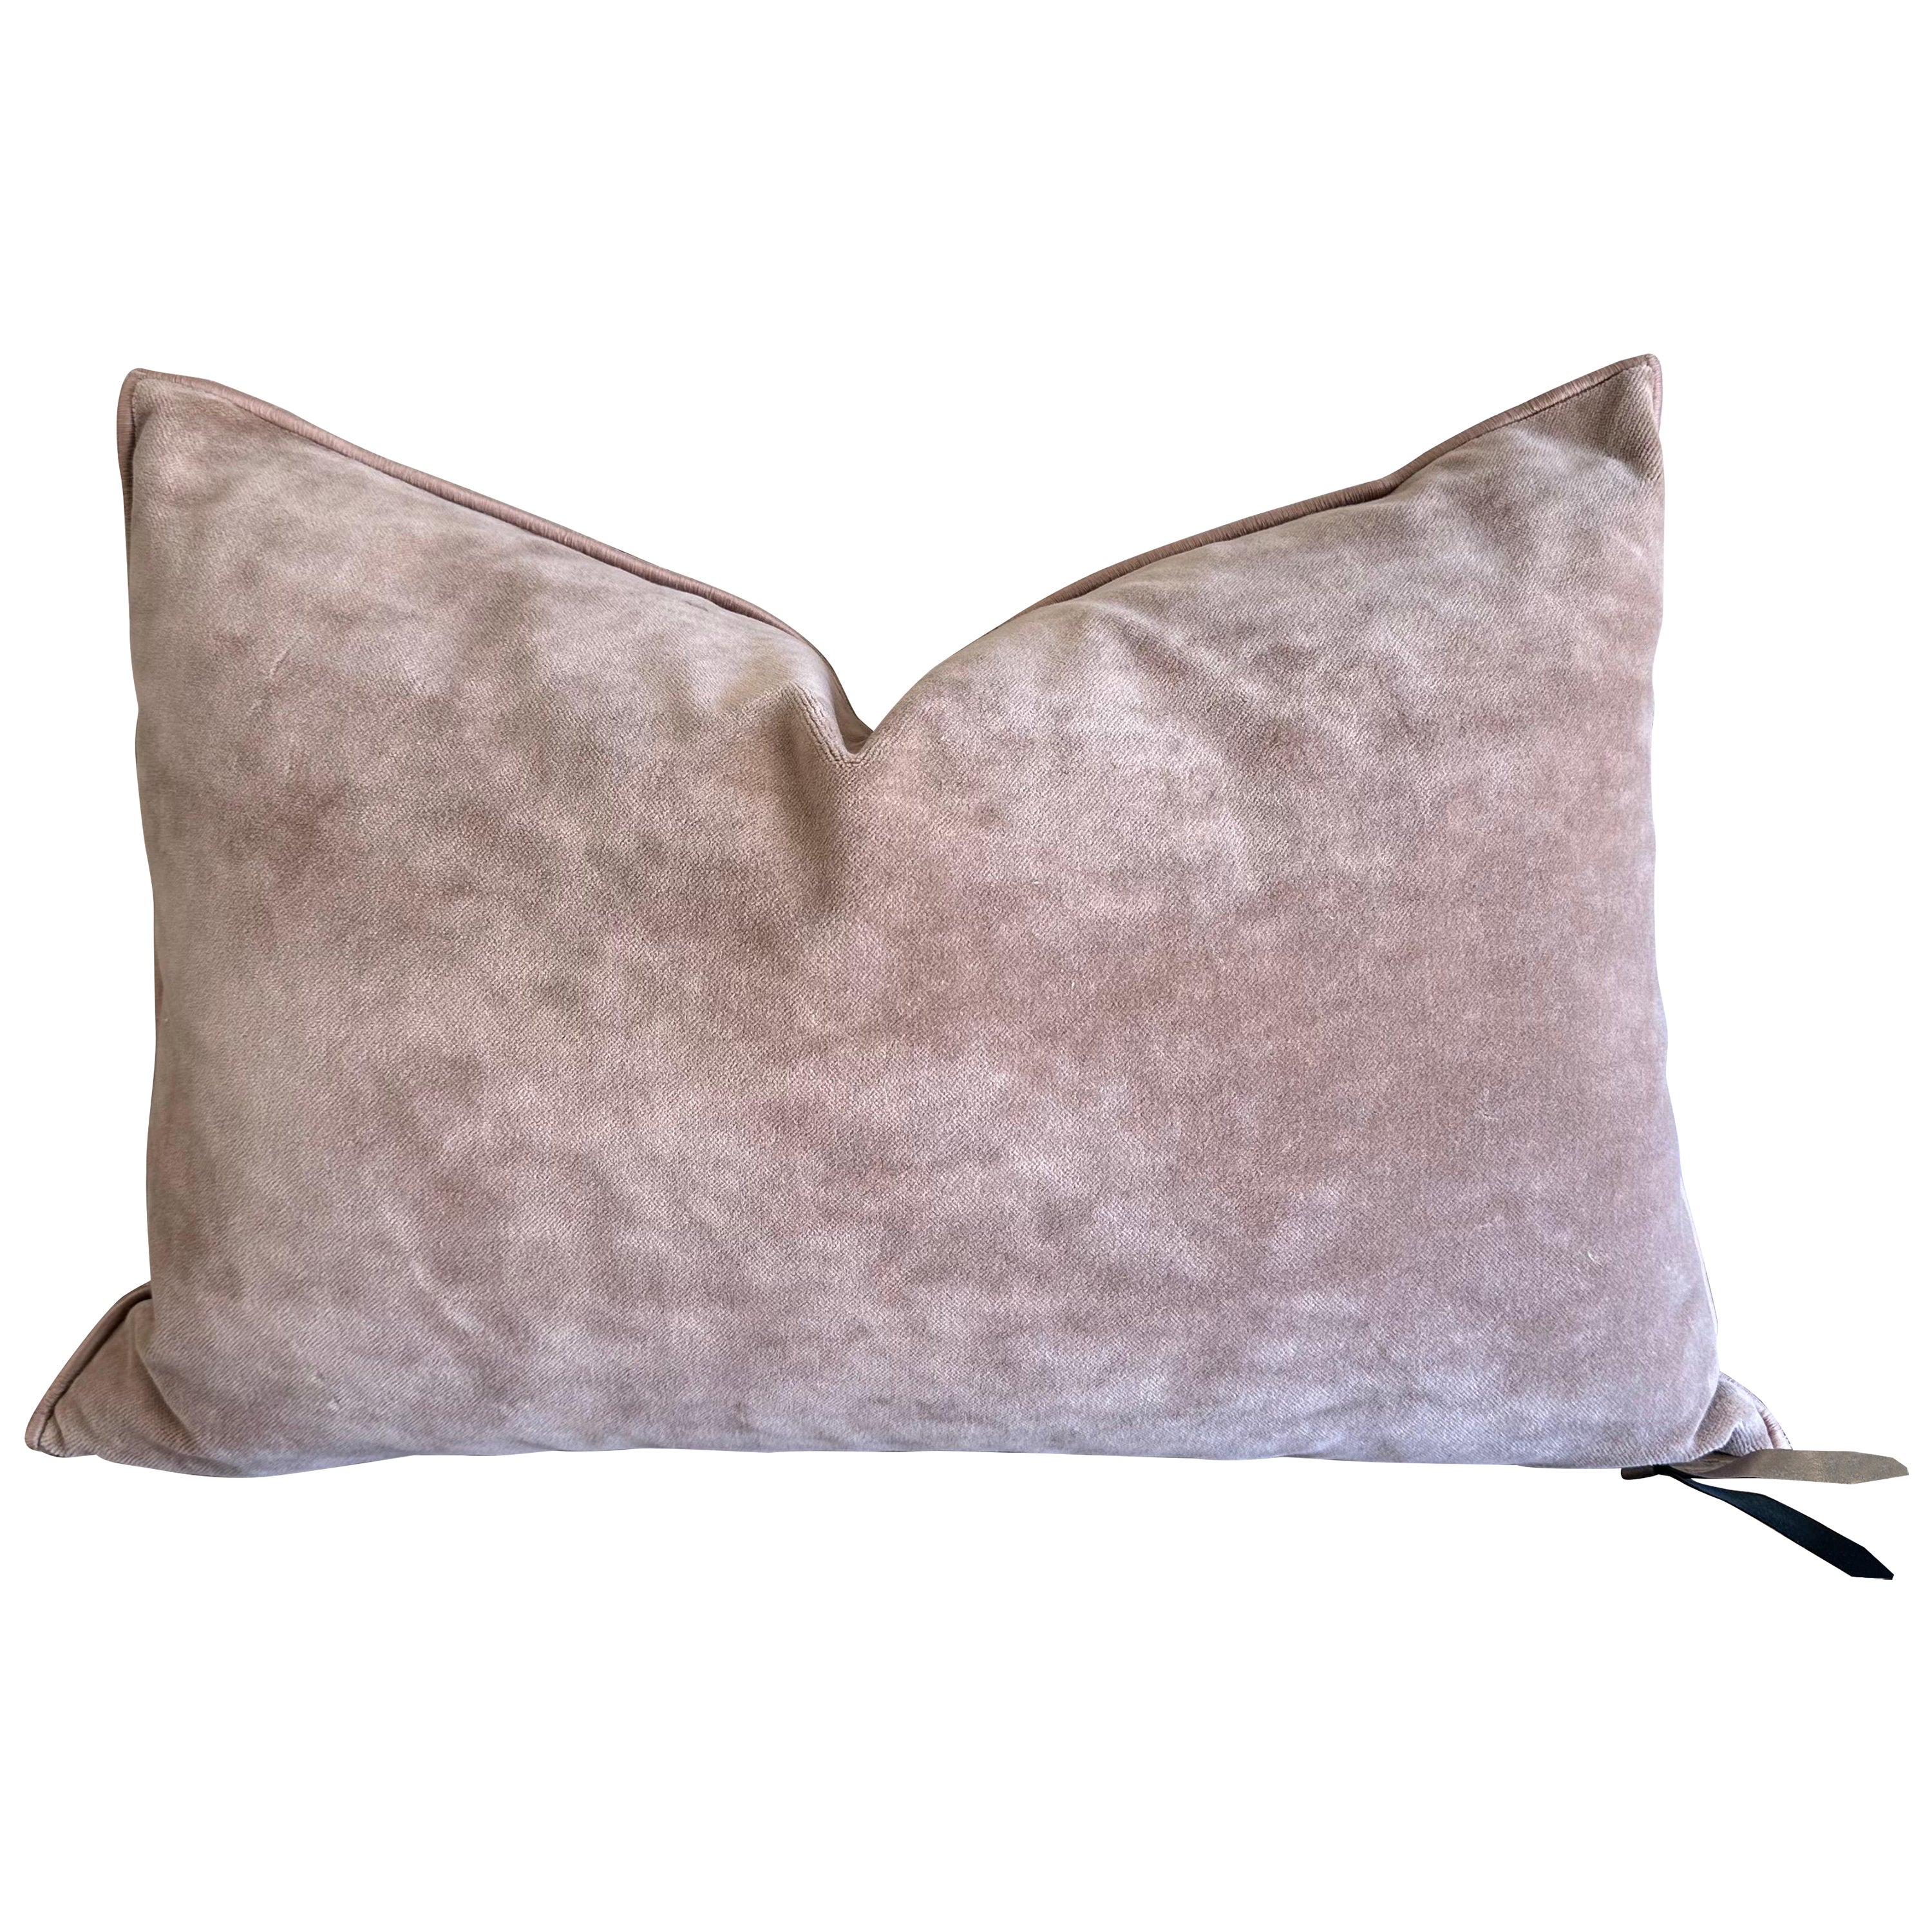 European Vintage Style Blush Velvet Accent Pillow with Down Insert